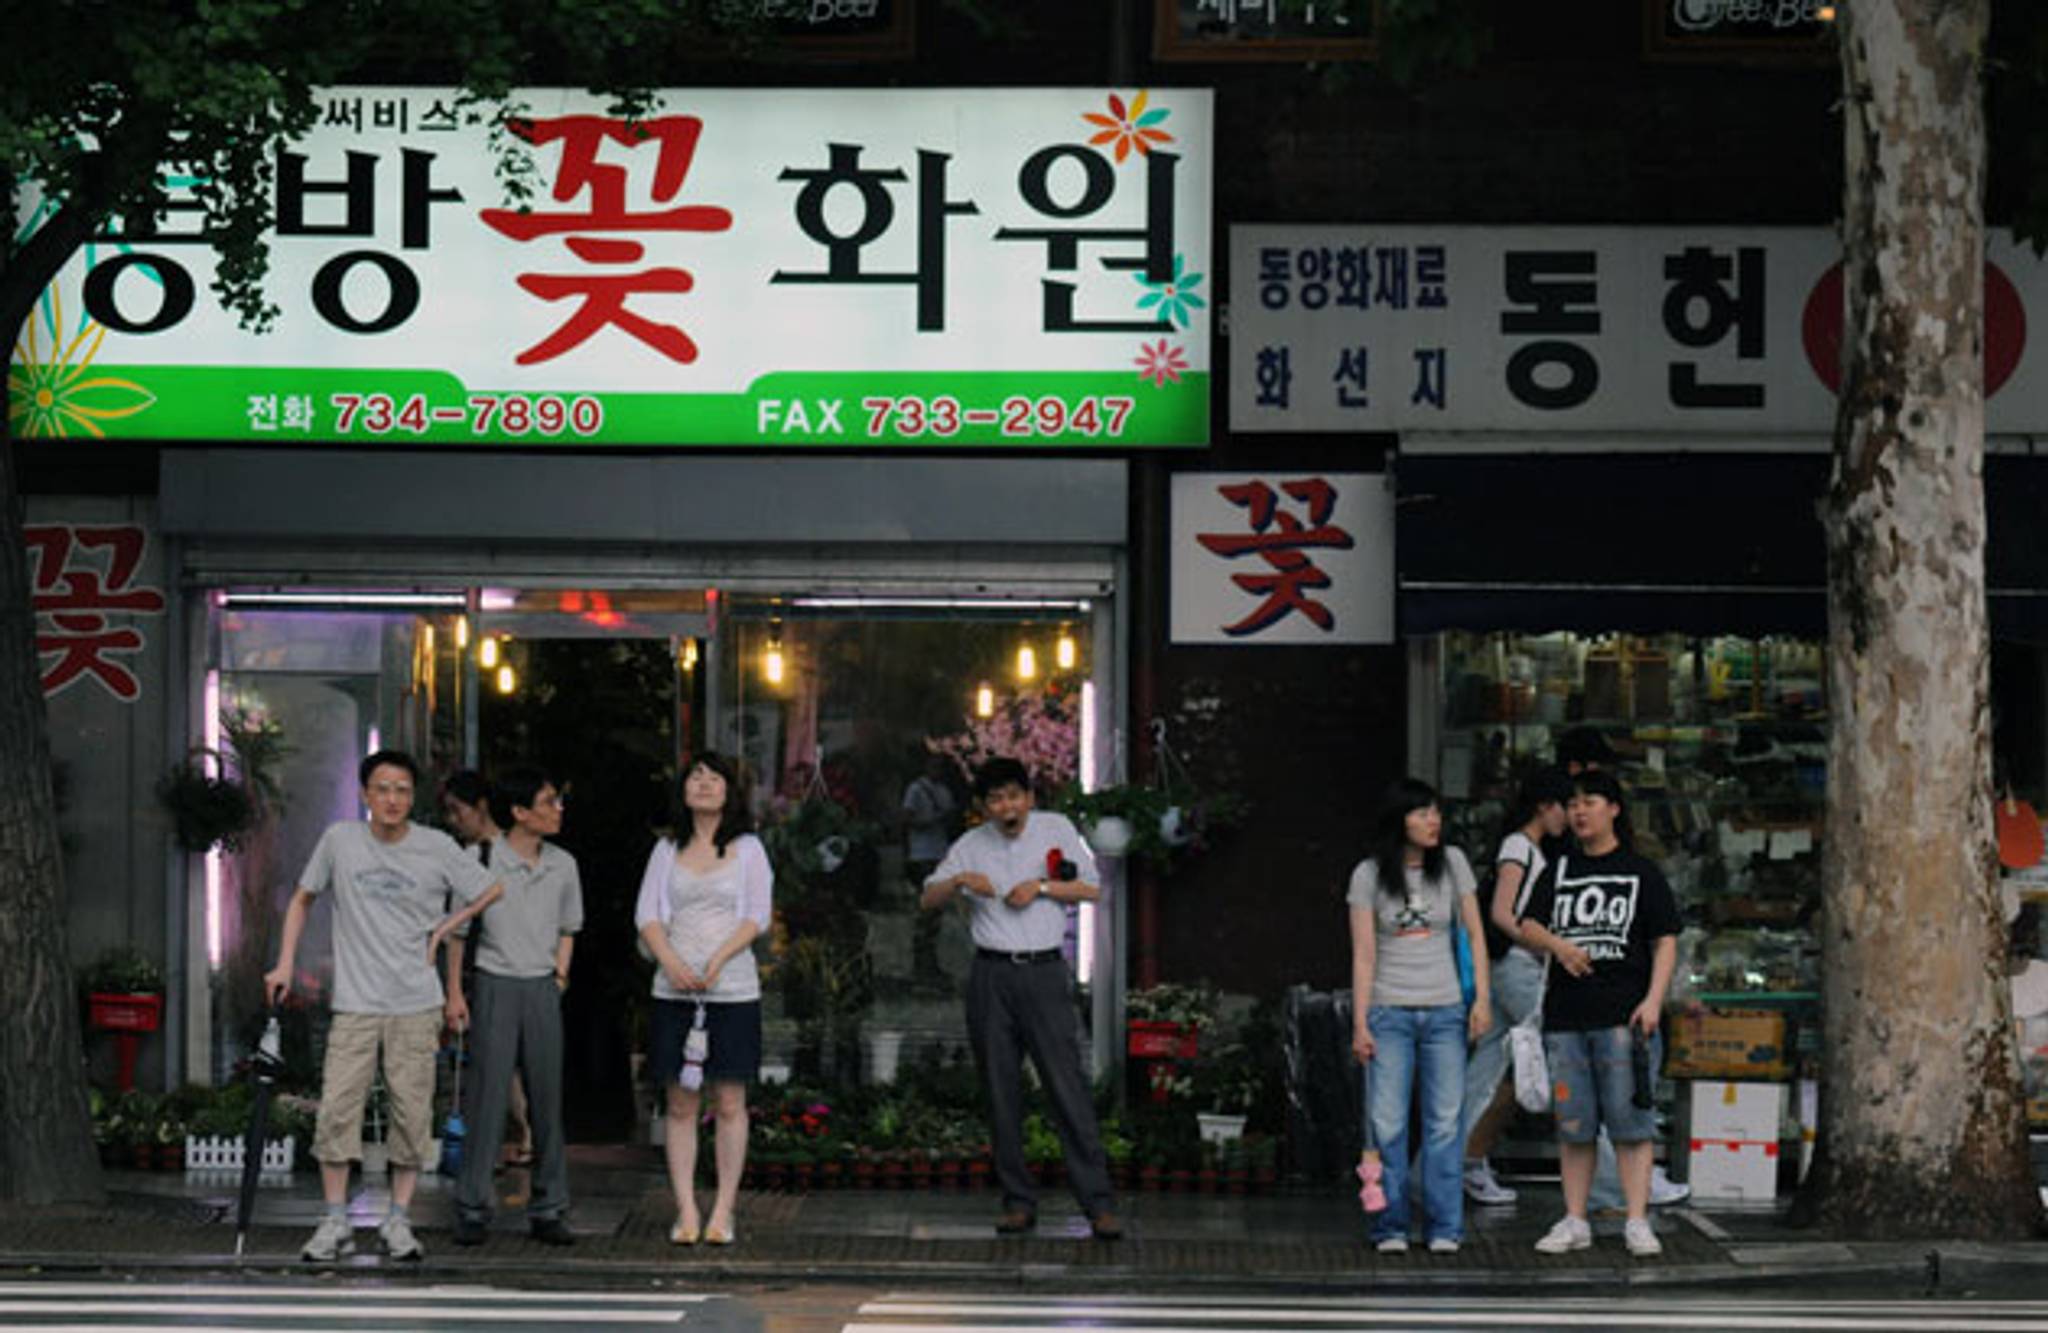 Korean culture and the consumer market